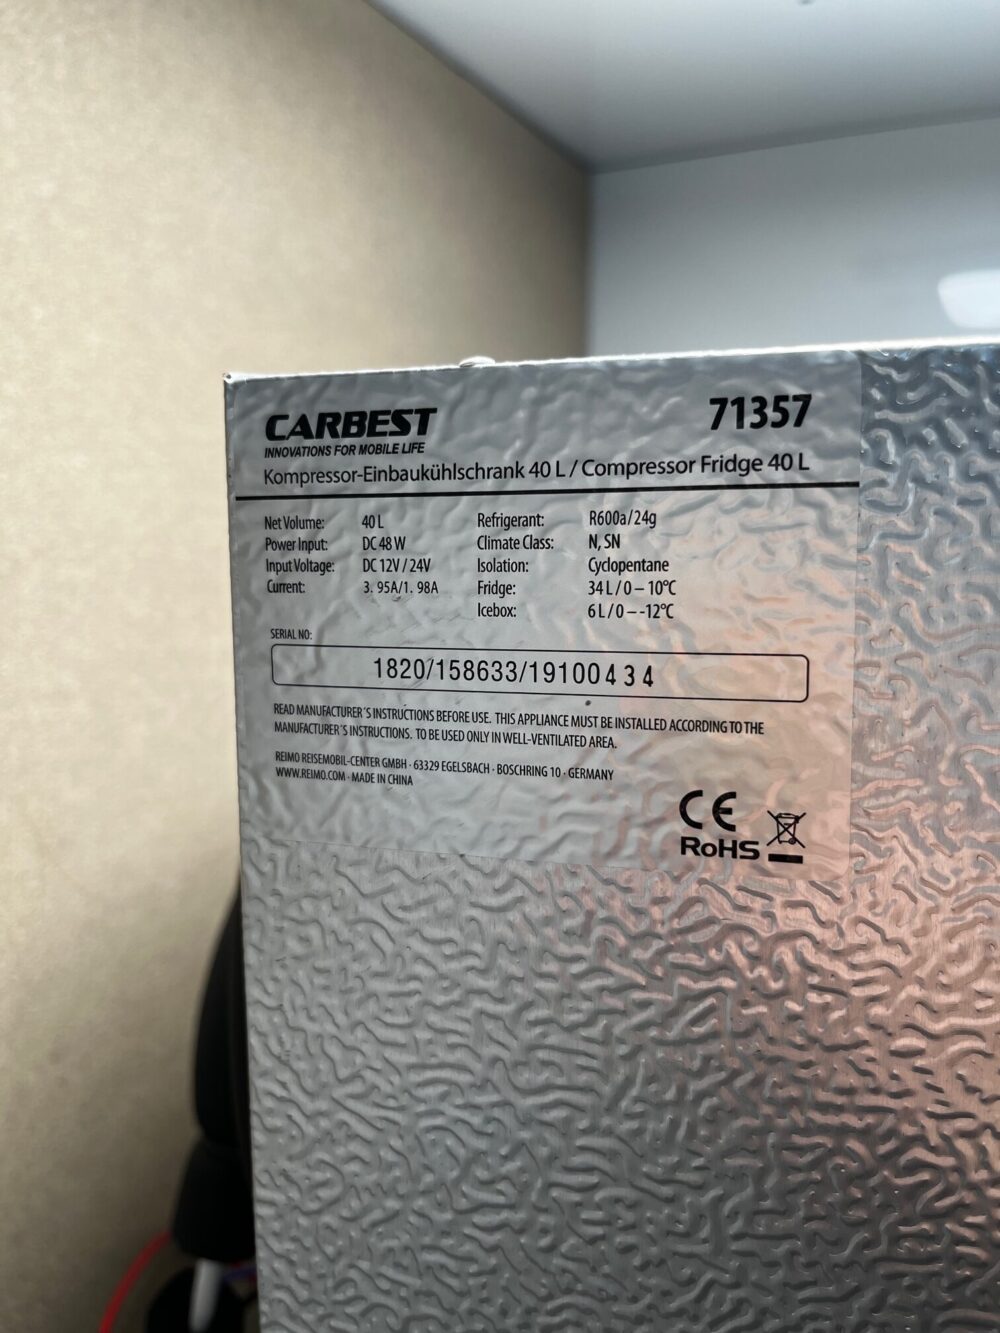 Carbest Kompressor Einbaukühlschrank 40L 71357